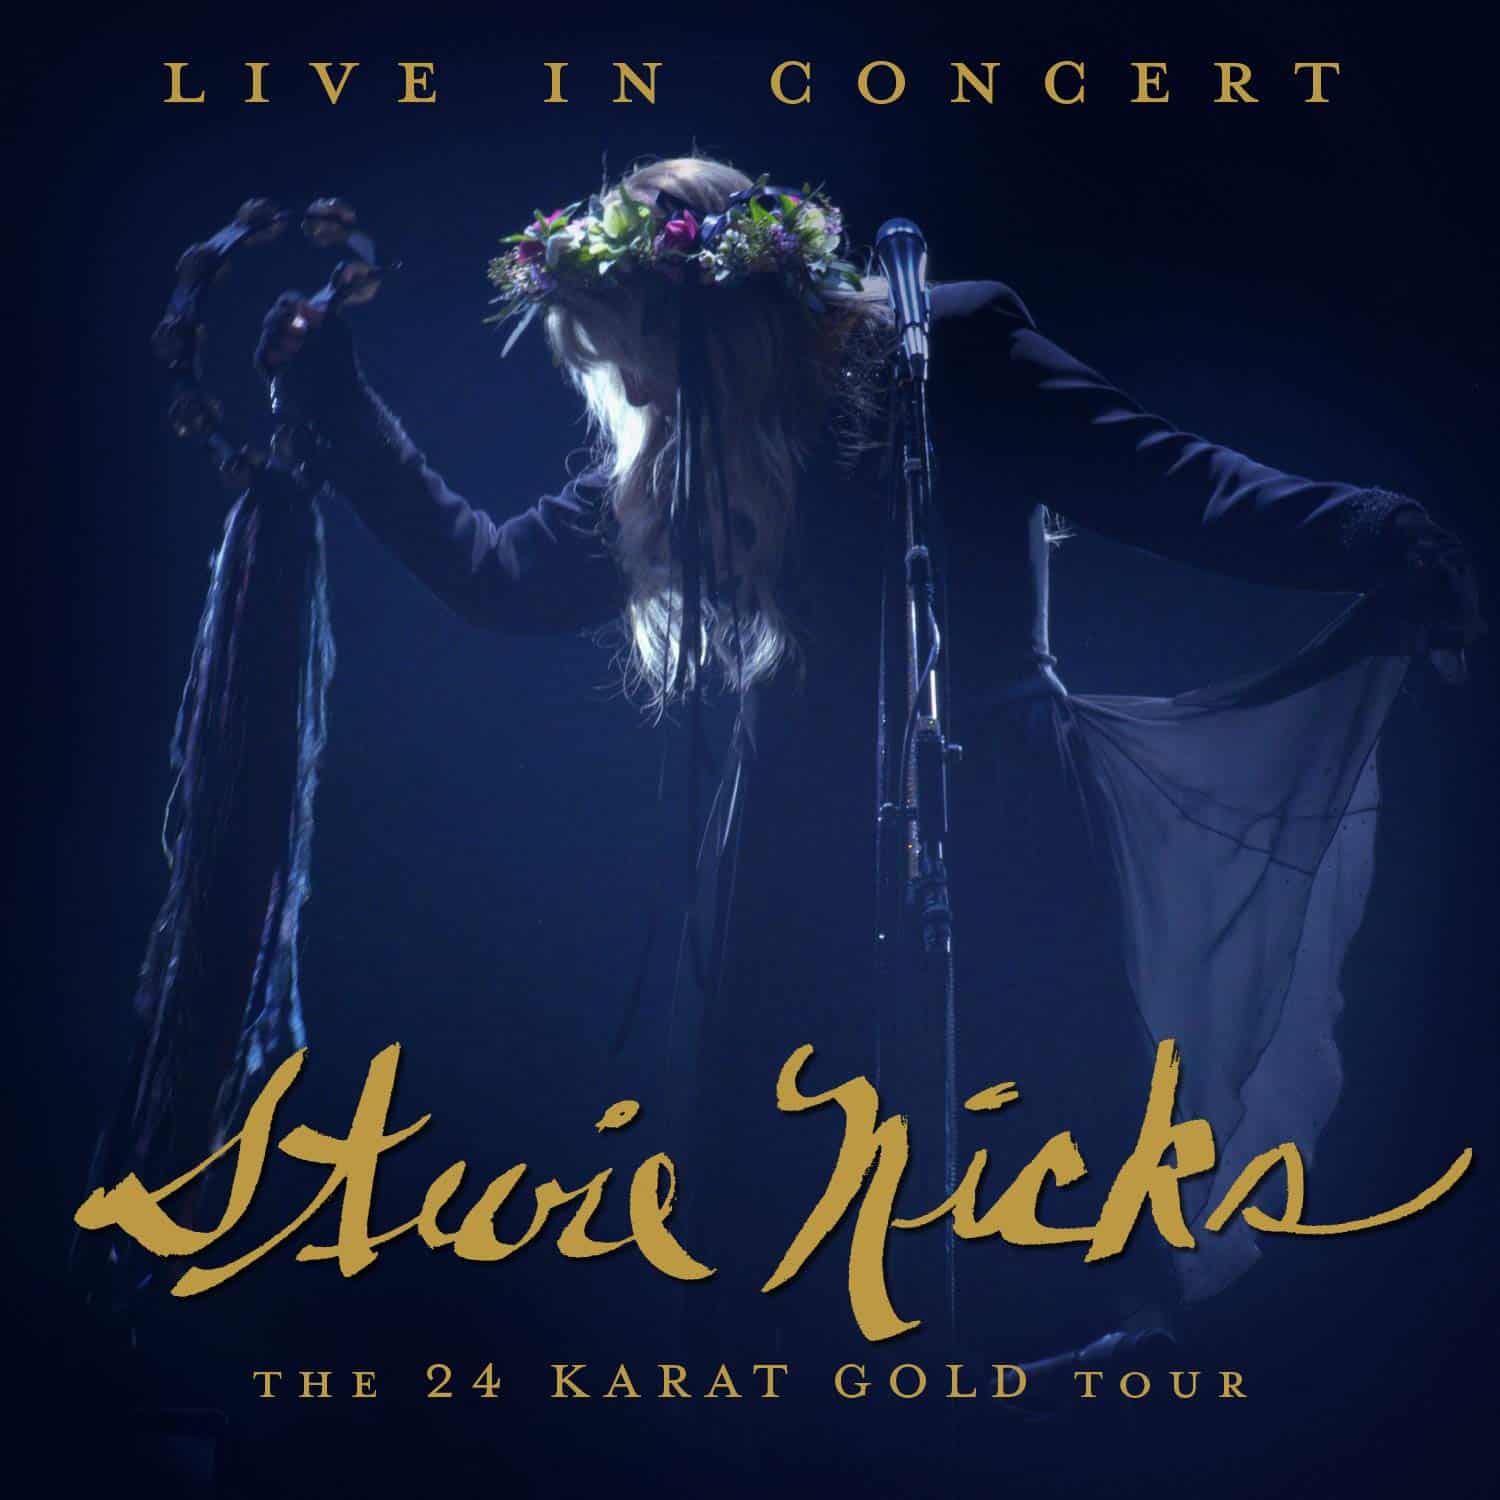 Steve-nicks-live-in-concert-the-24-karat-gold-tour-vinyl-record-album-1